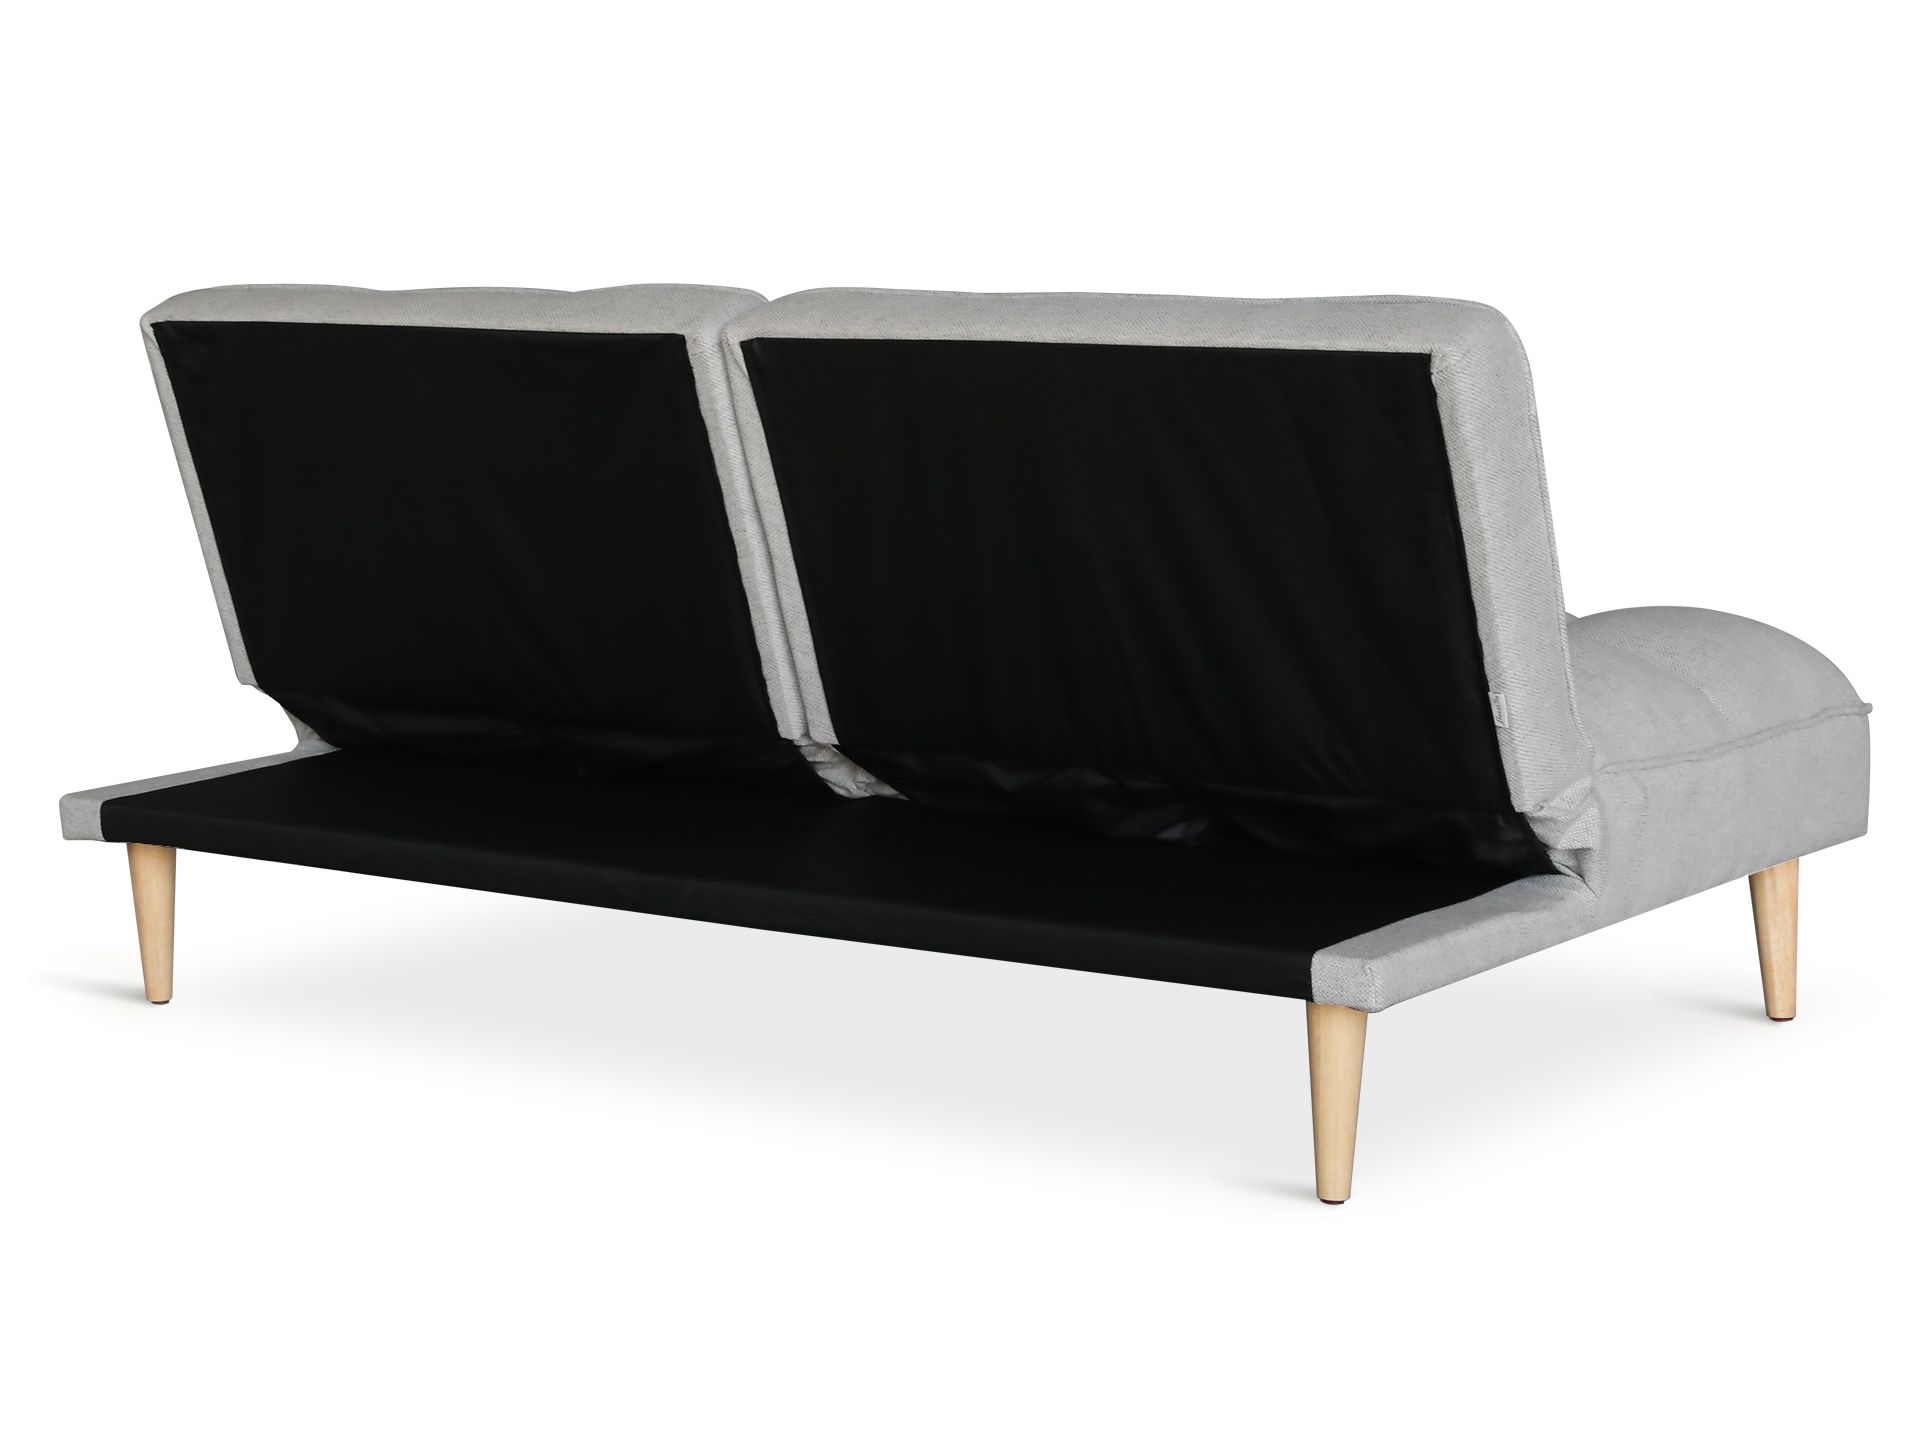 Barton 3 Seater Sofa Bed - Light Grey